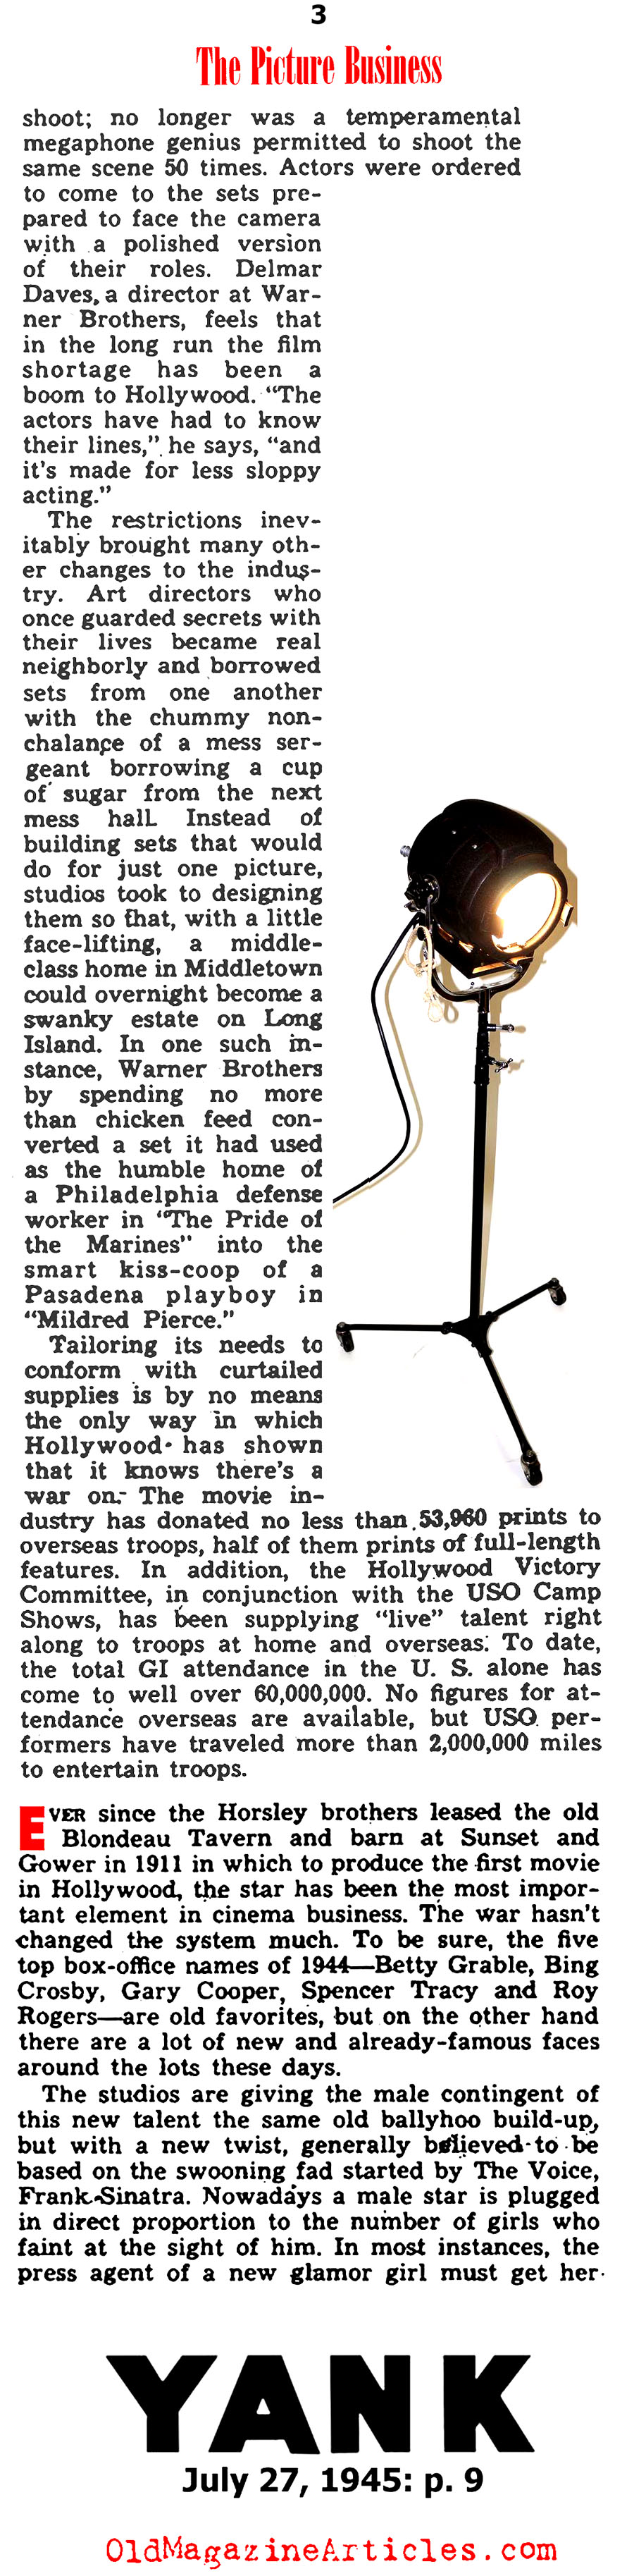 World War Two Hollywood (Yank Magazine, 1945)